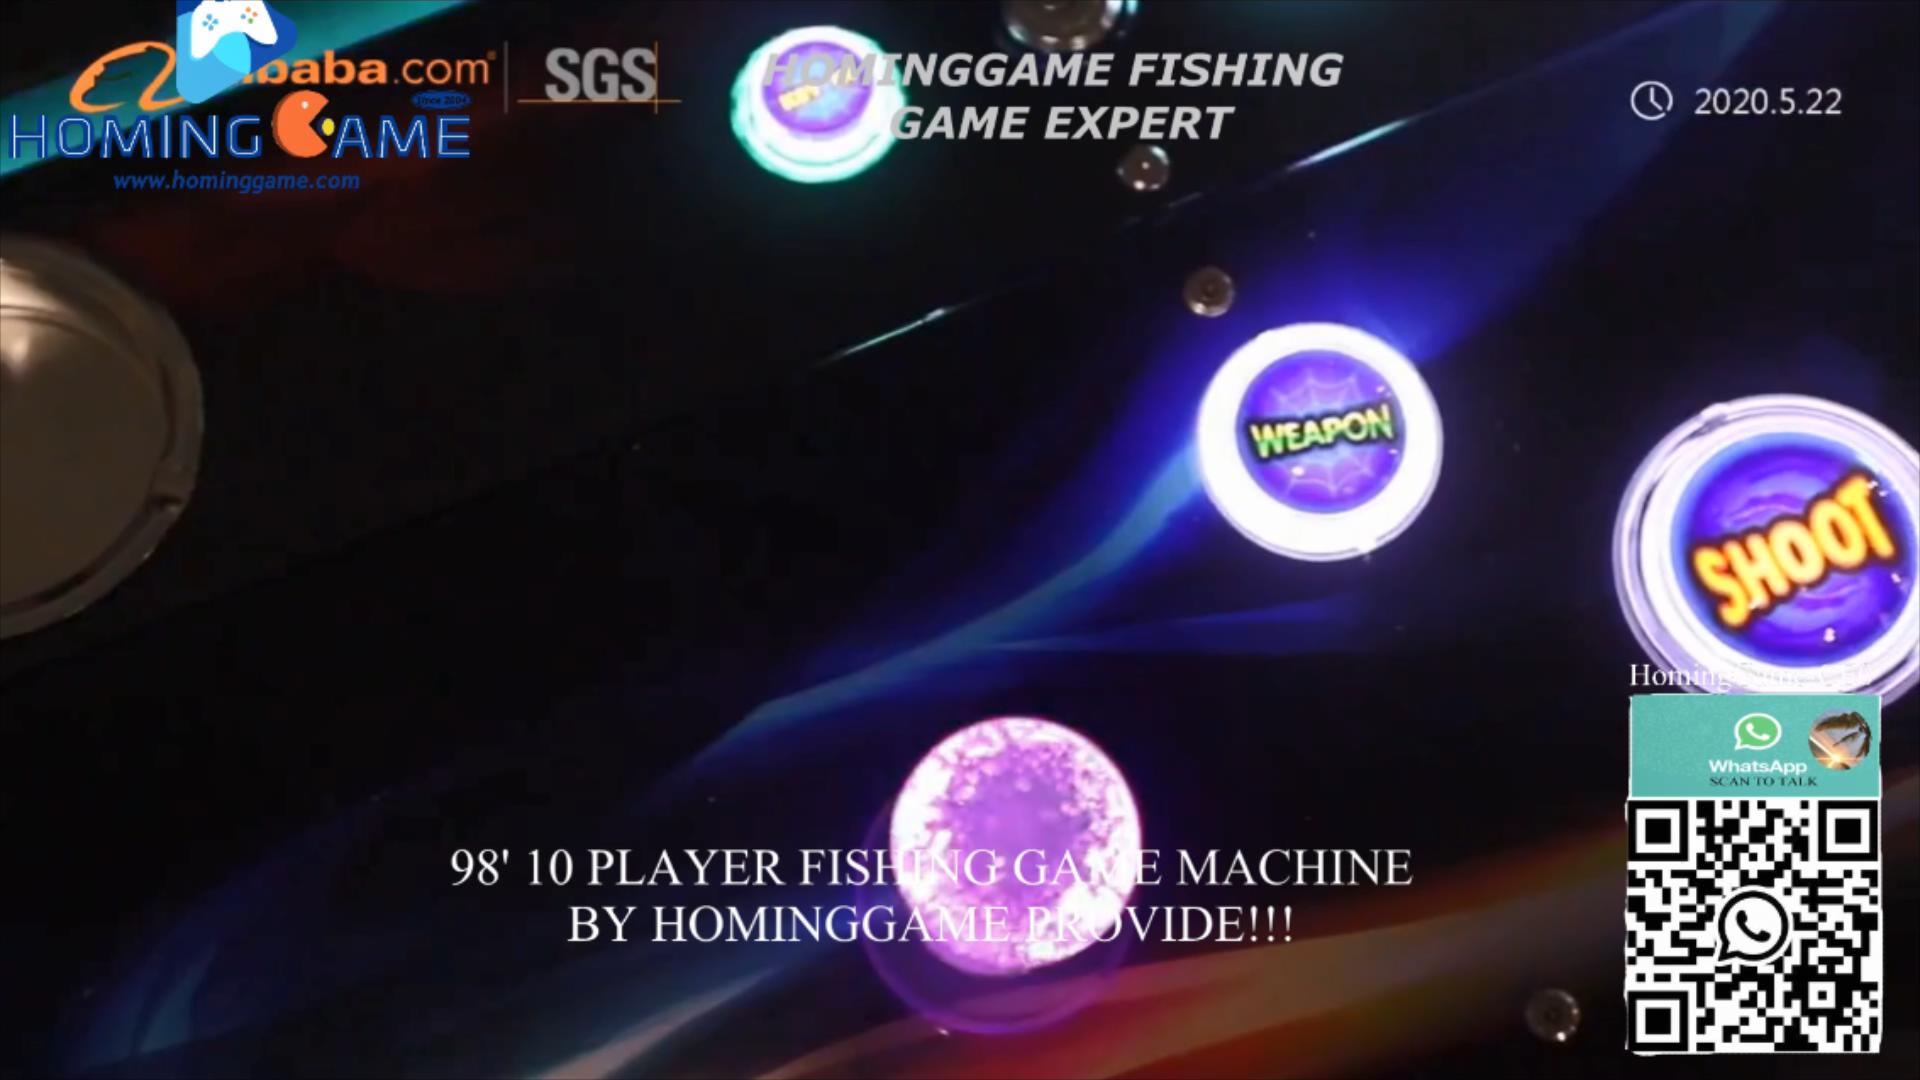 85 large screen 10 player fishing game machine,85